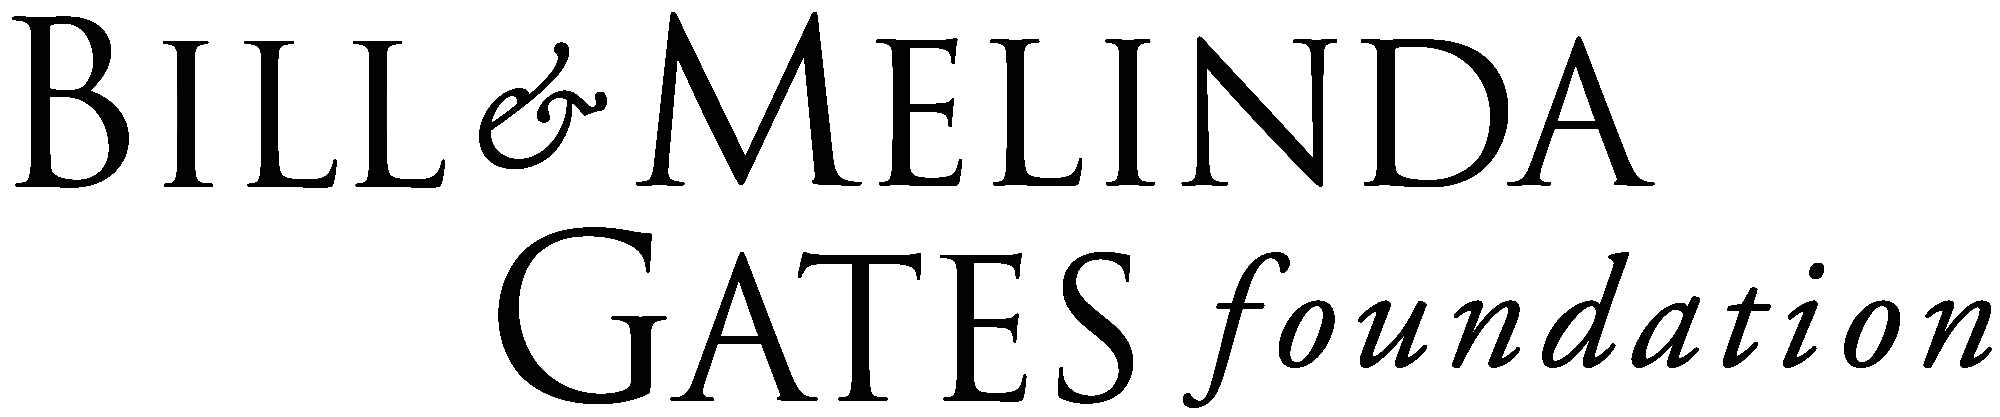 Bill-Melinda-Gates-Foundation-Logo Black.png